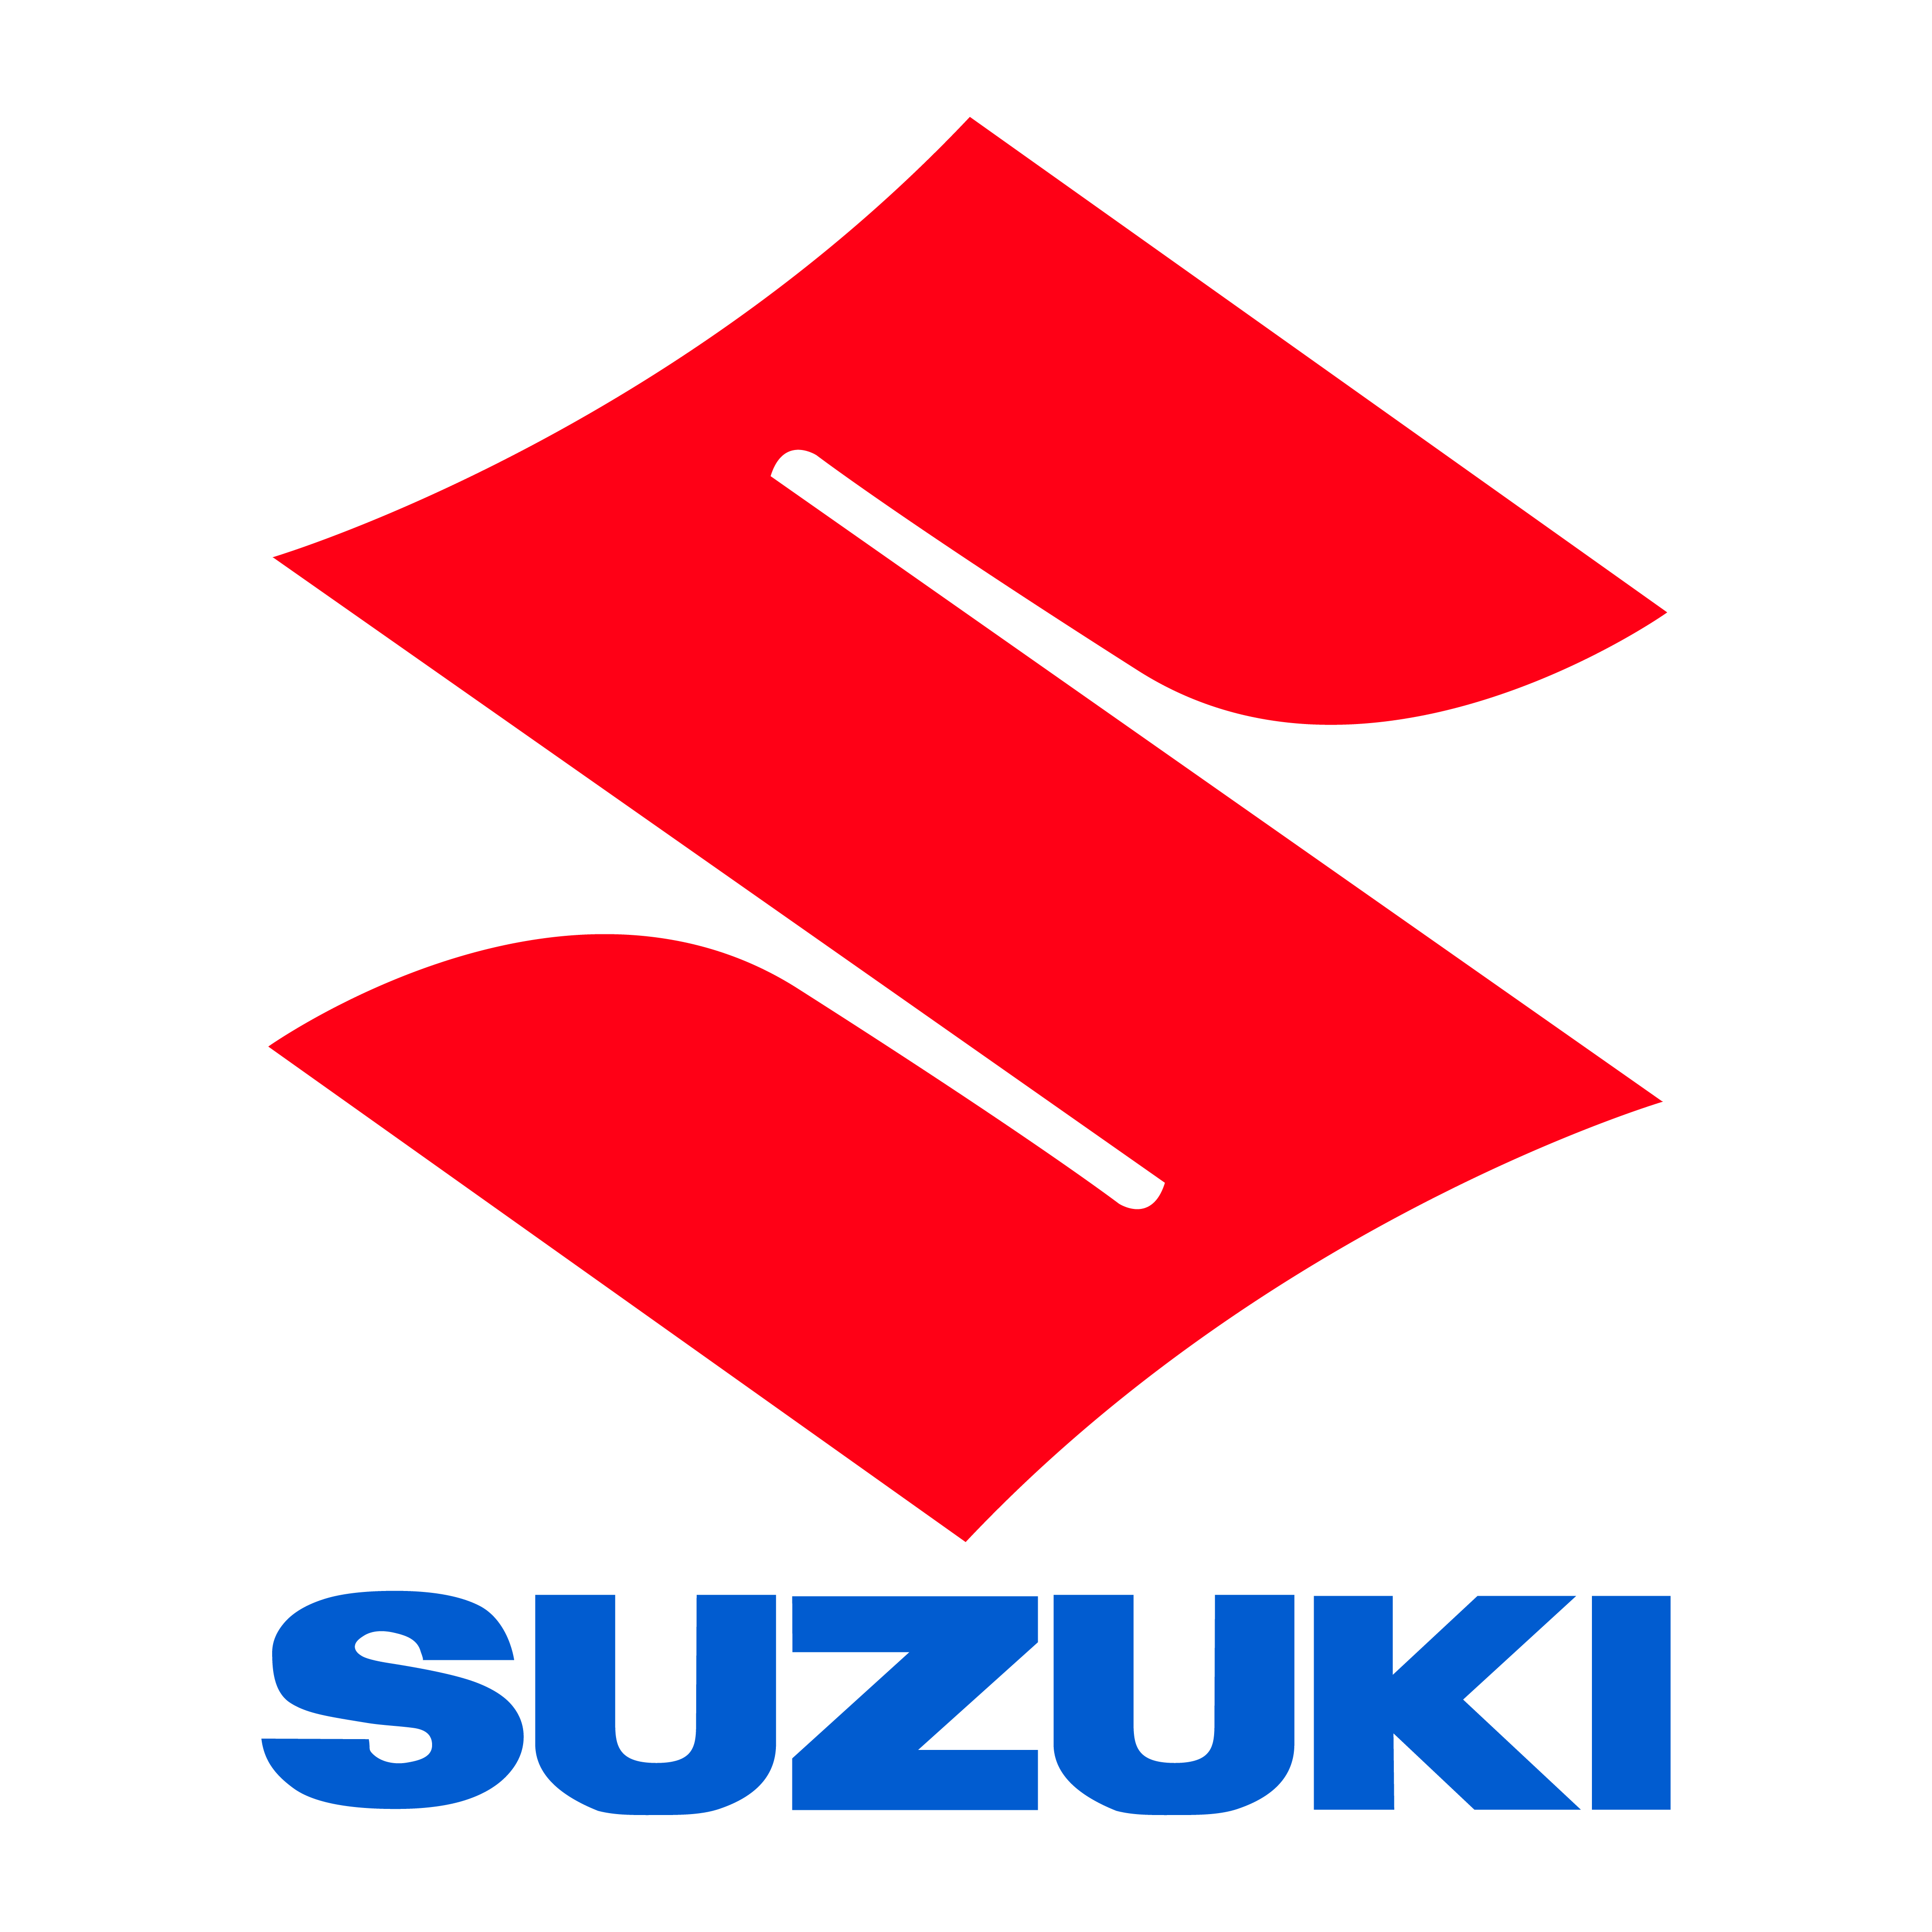 Suzuki name meaning